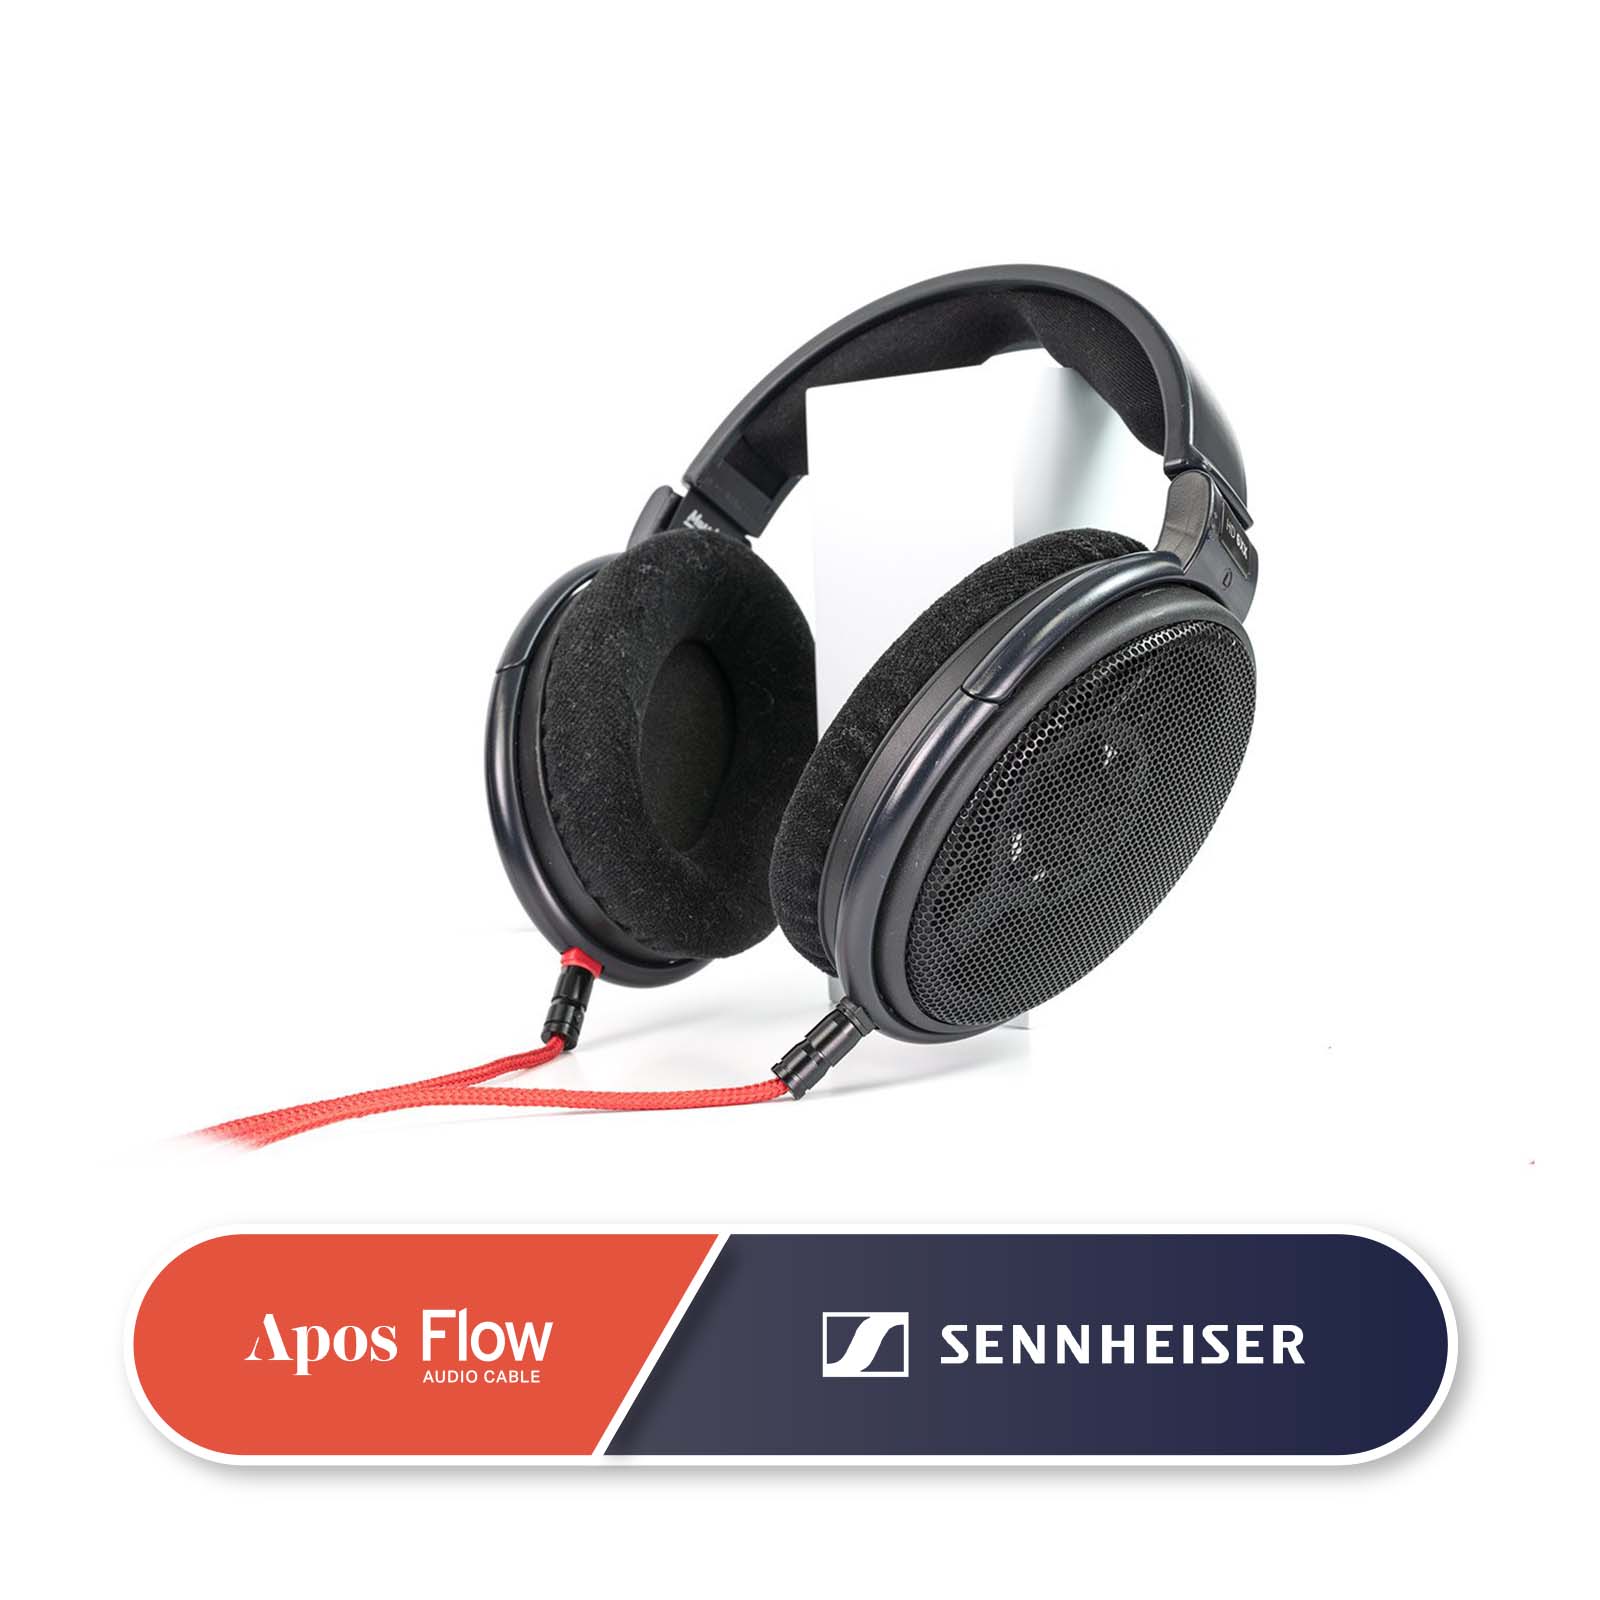 Original Sennheiser Hd600 Earphone Over-ear Wired Portable Headset